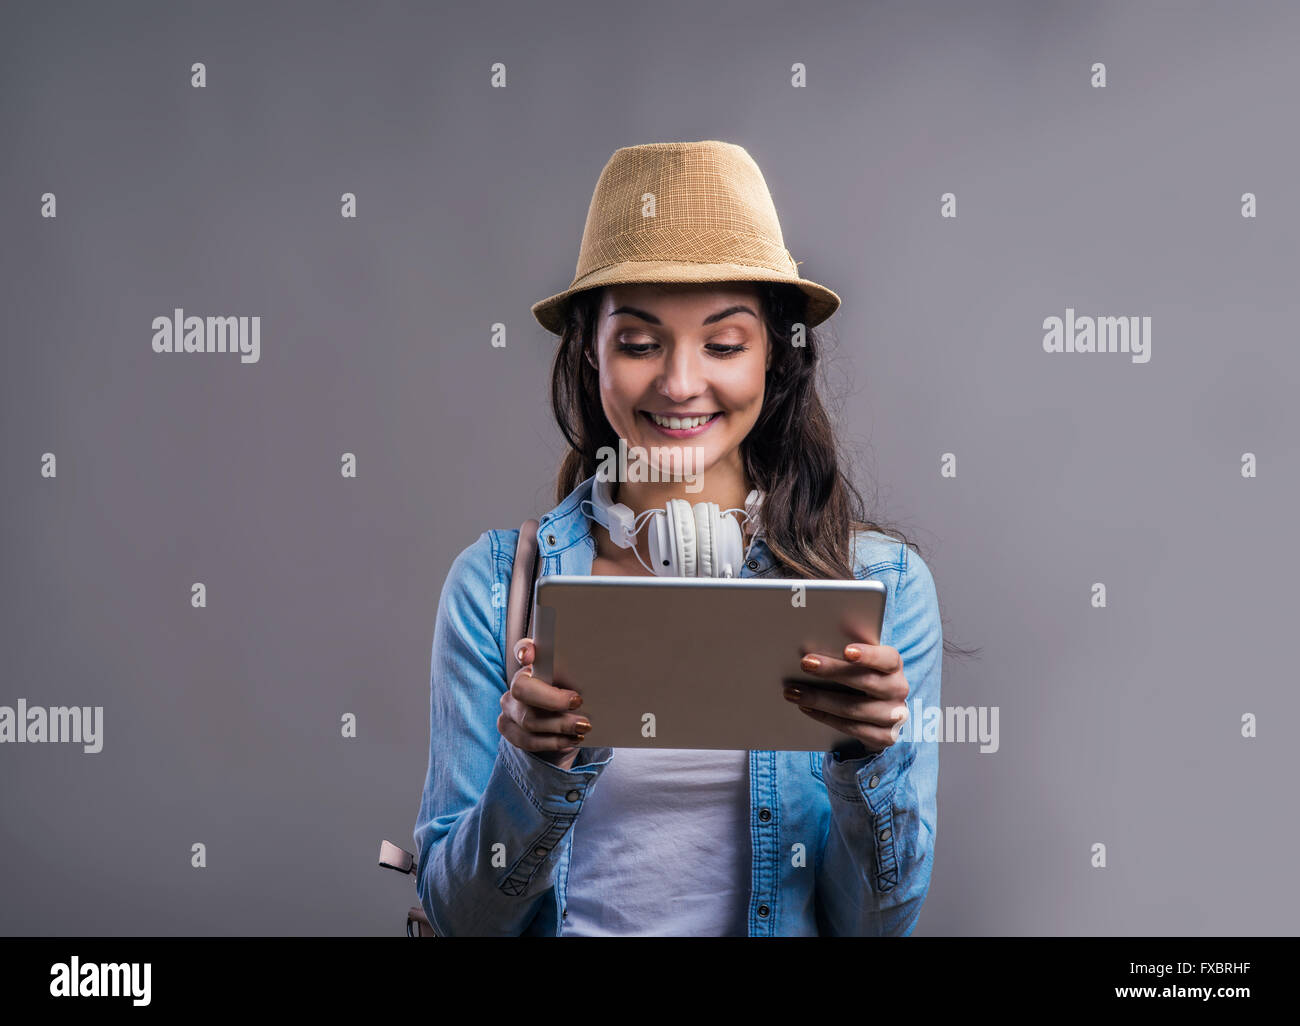 Tourist girl in denim shirt with tablet, studio shot Stock Photo